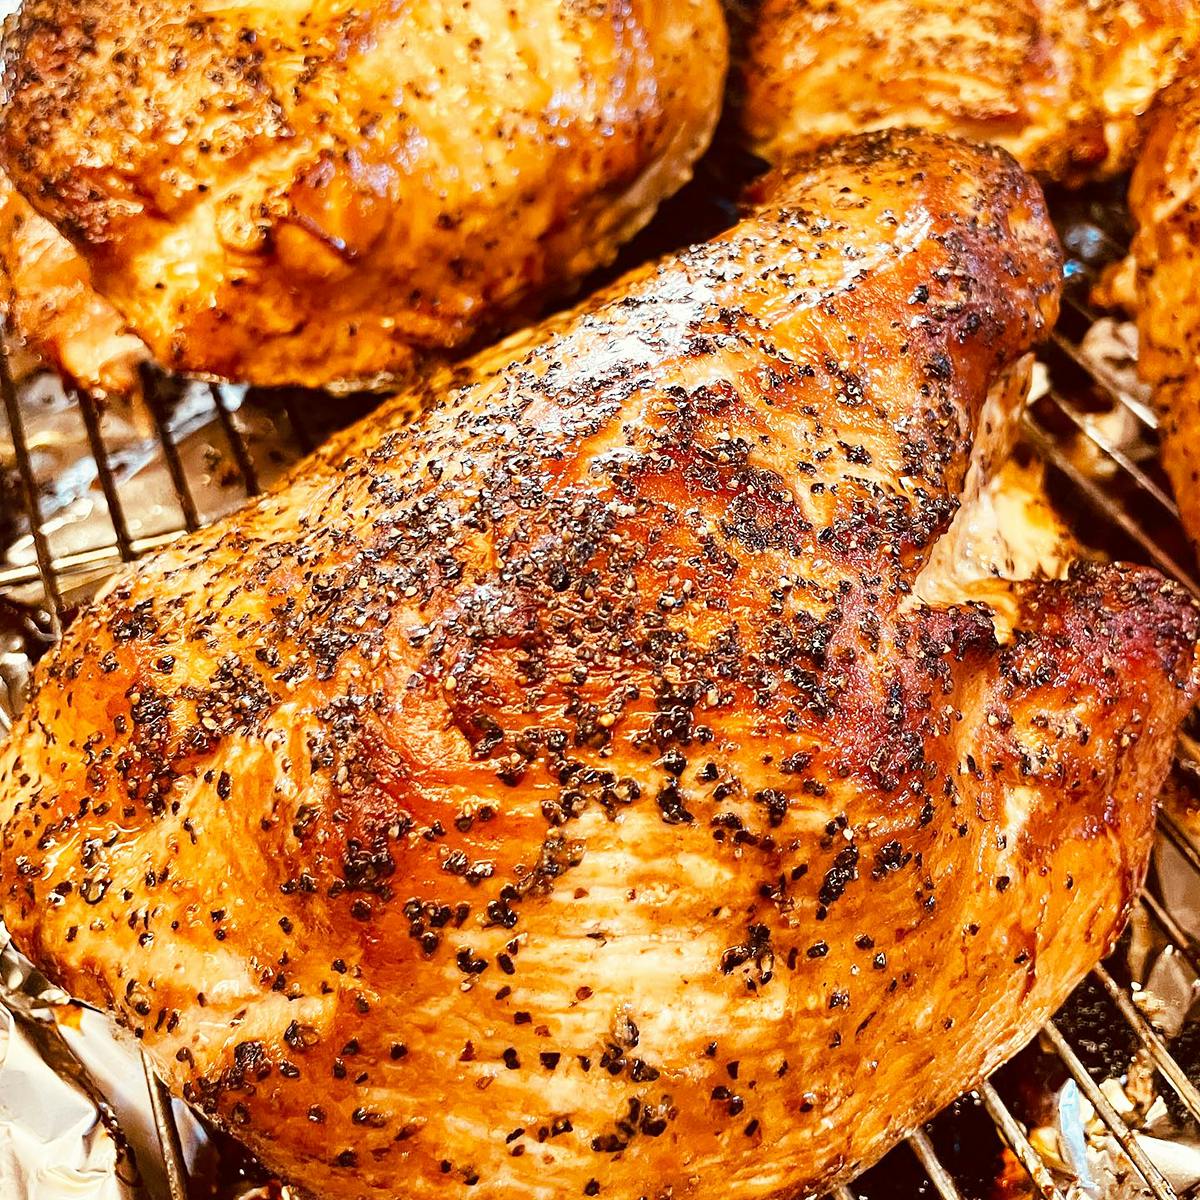 Artisan Roasted Turkey Breast at Whole Foods Market